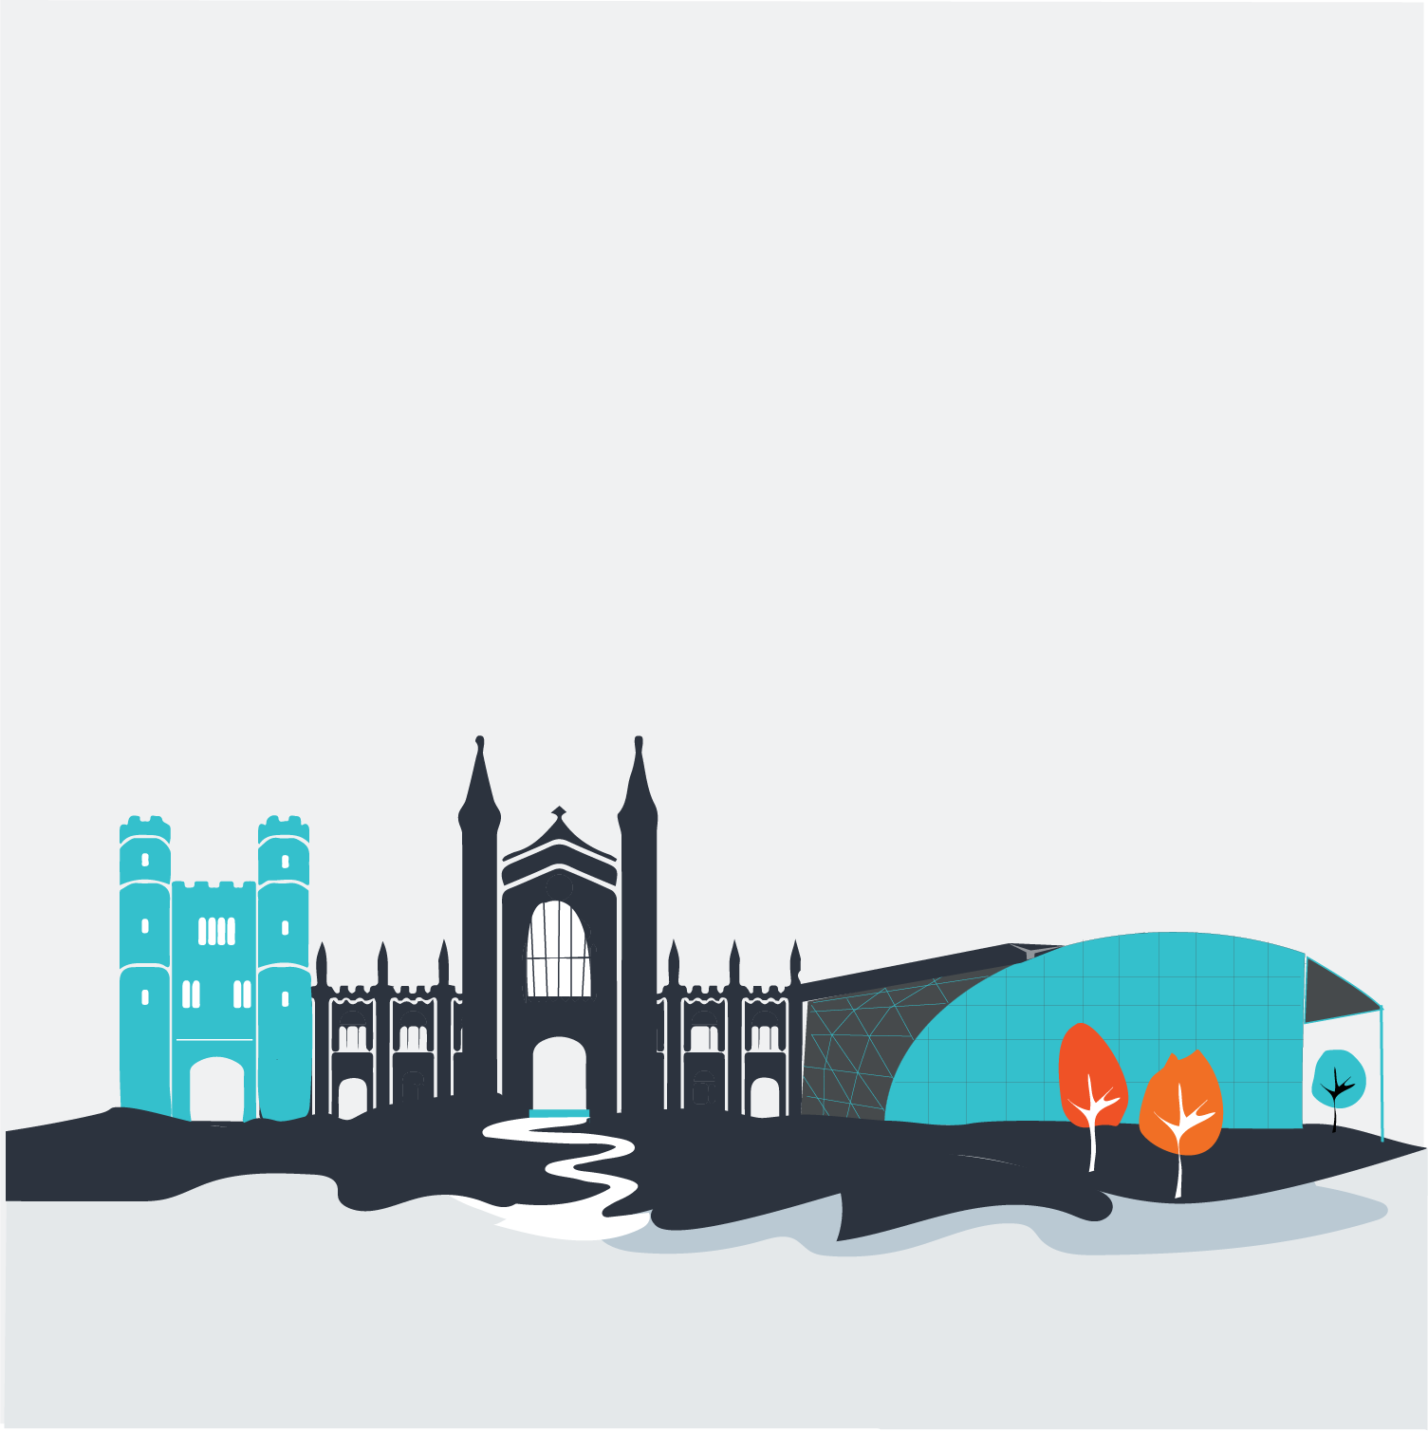 London Bridge illustration